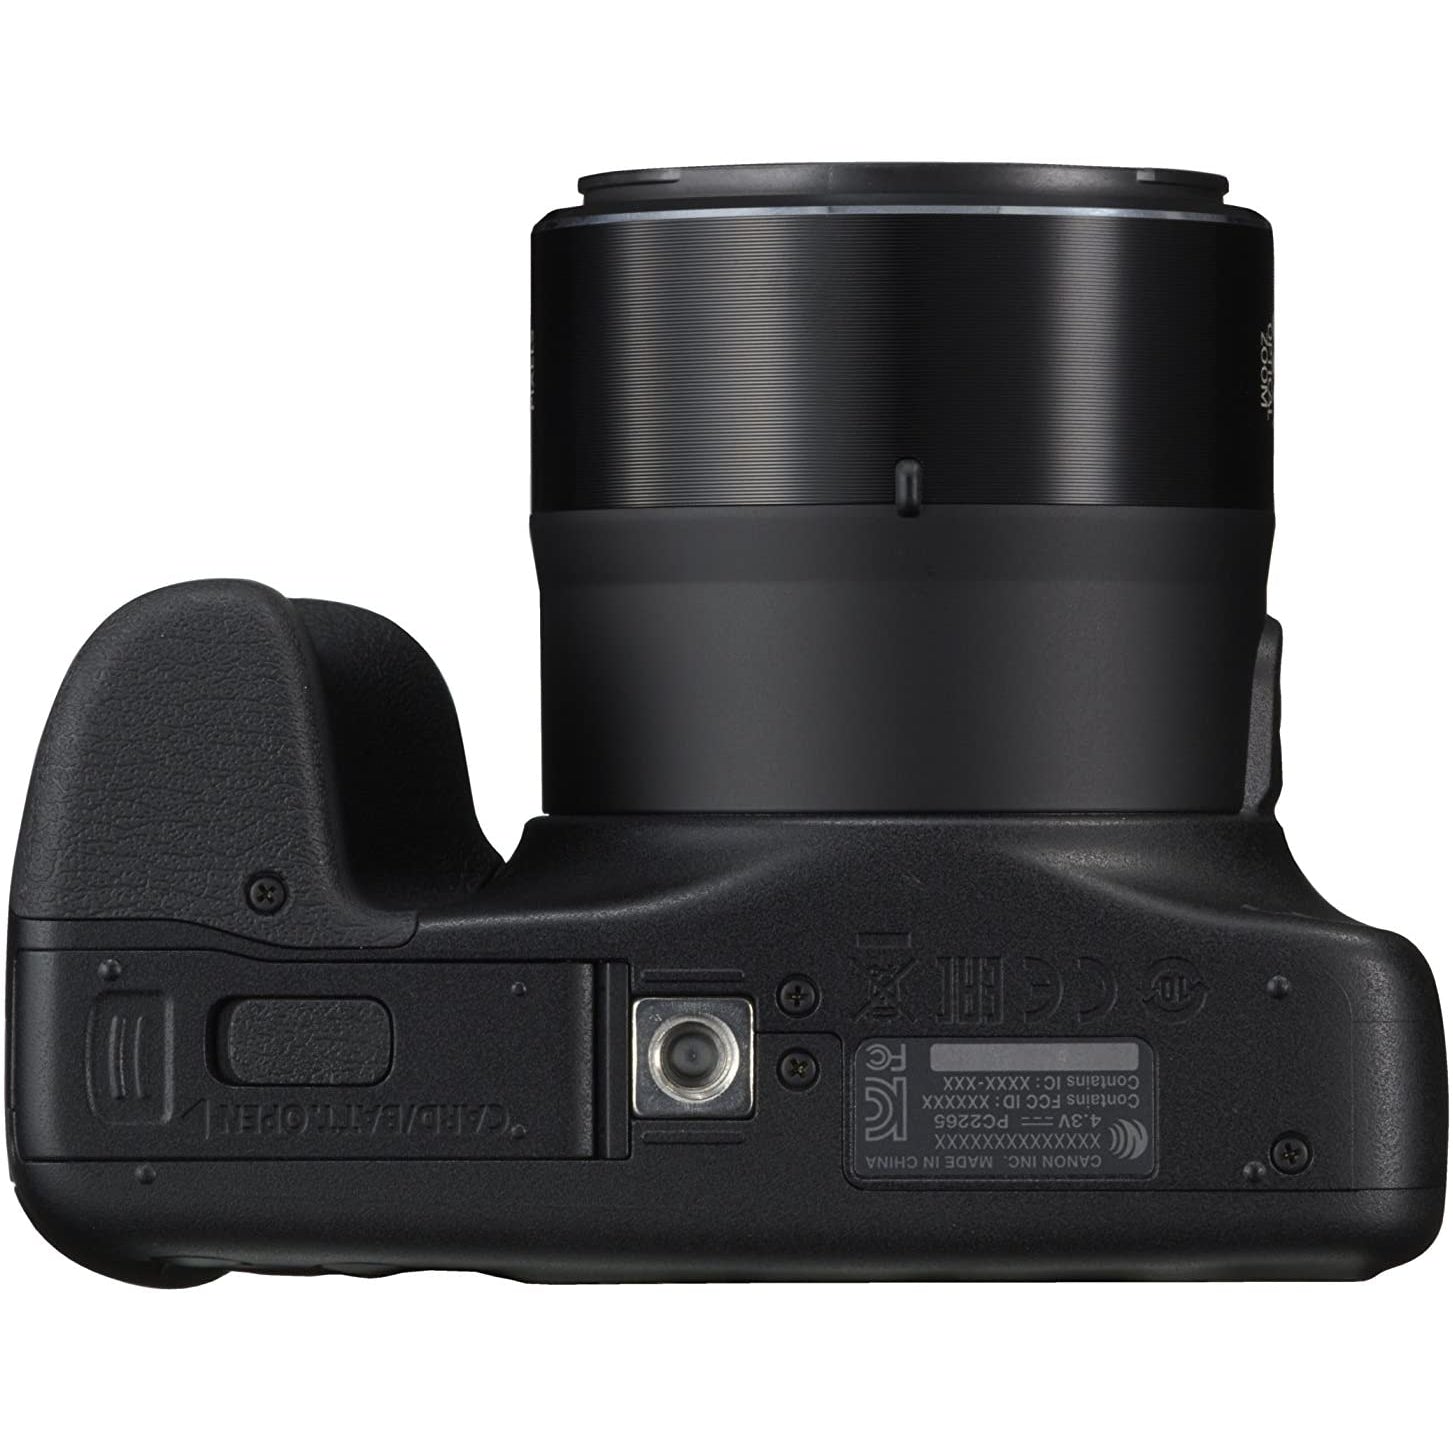 Canon PowerShot SX540 HS Bridge Camera, HD 1080p, Wi-Fi, NFC, 20.3MP, 50x, Black - Refurbished Pristine